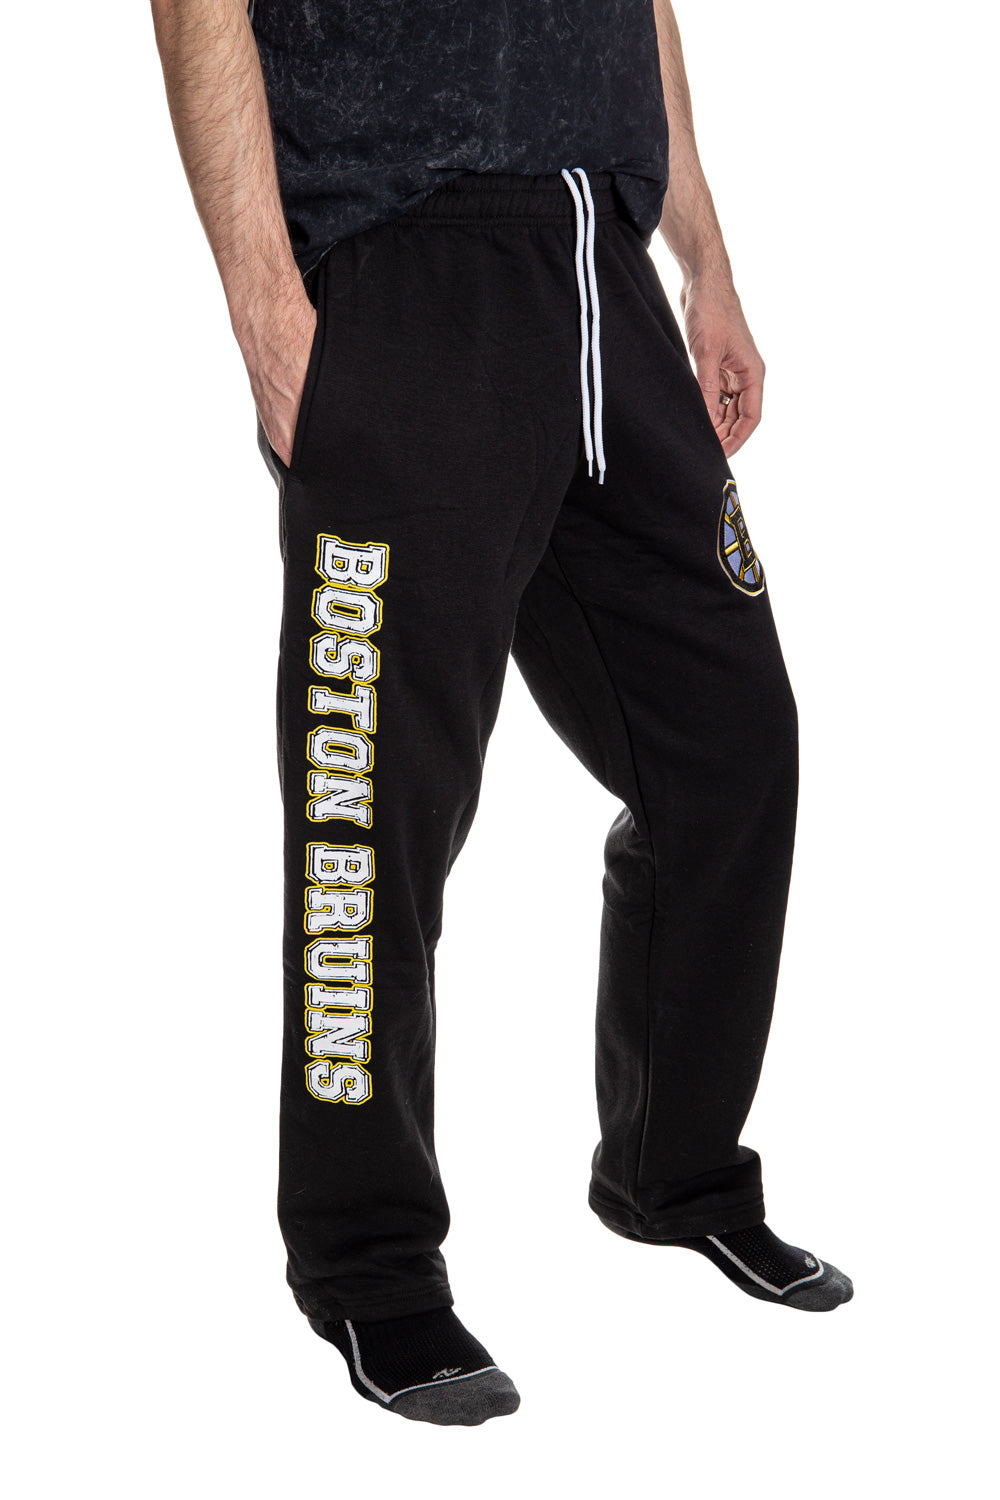 Boston Bruins Premium Fleece Sweatpants Side View, Boston Bruins Written Down Leg.